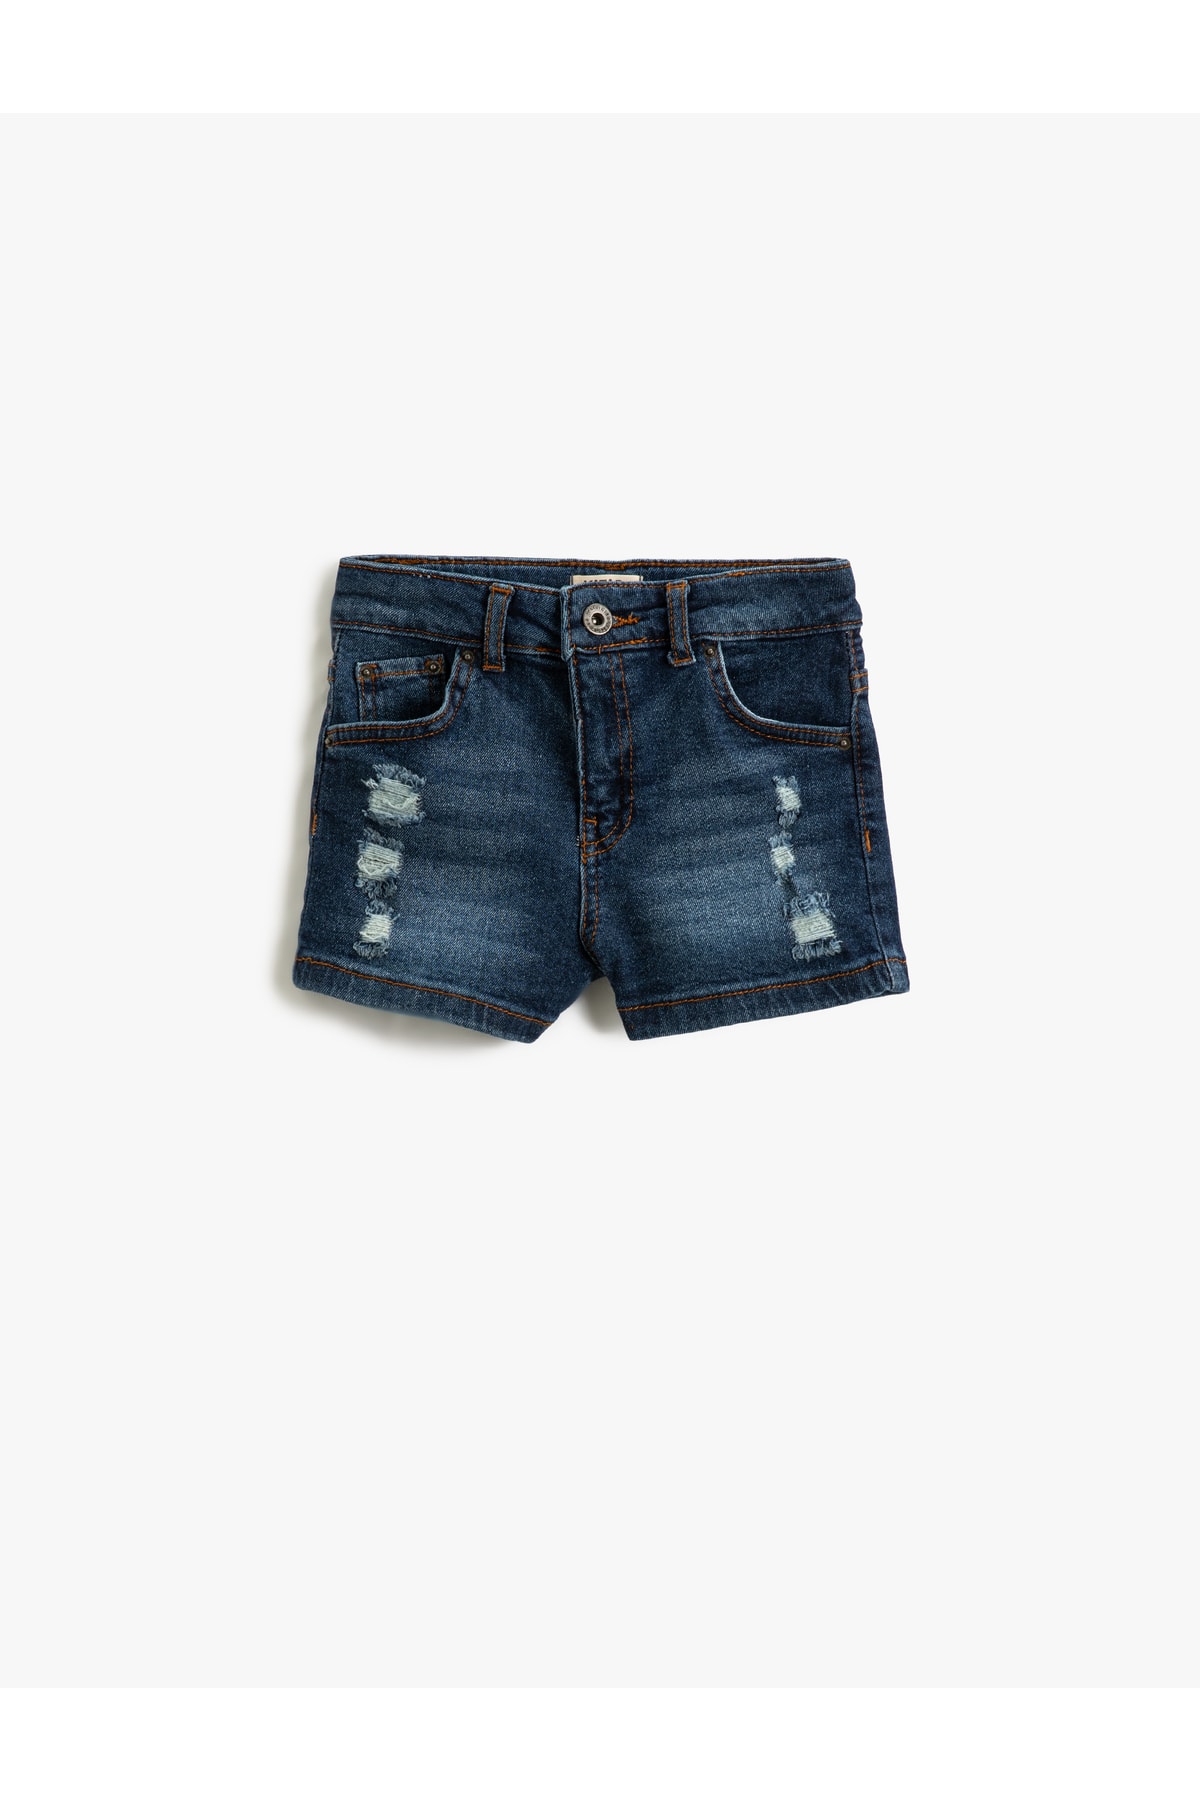 Koton Denim Shorts Worn In Detail, Pockets Cotton Cotton With An Adjustable Elastic Waist.